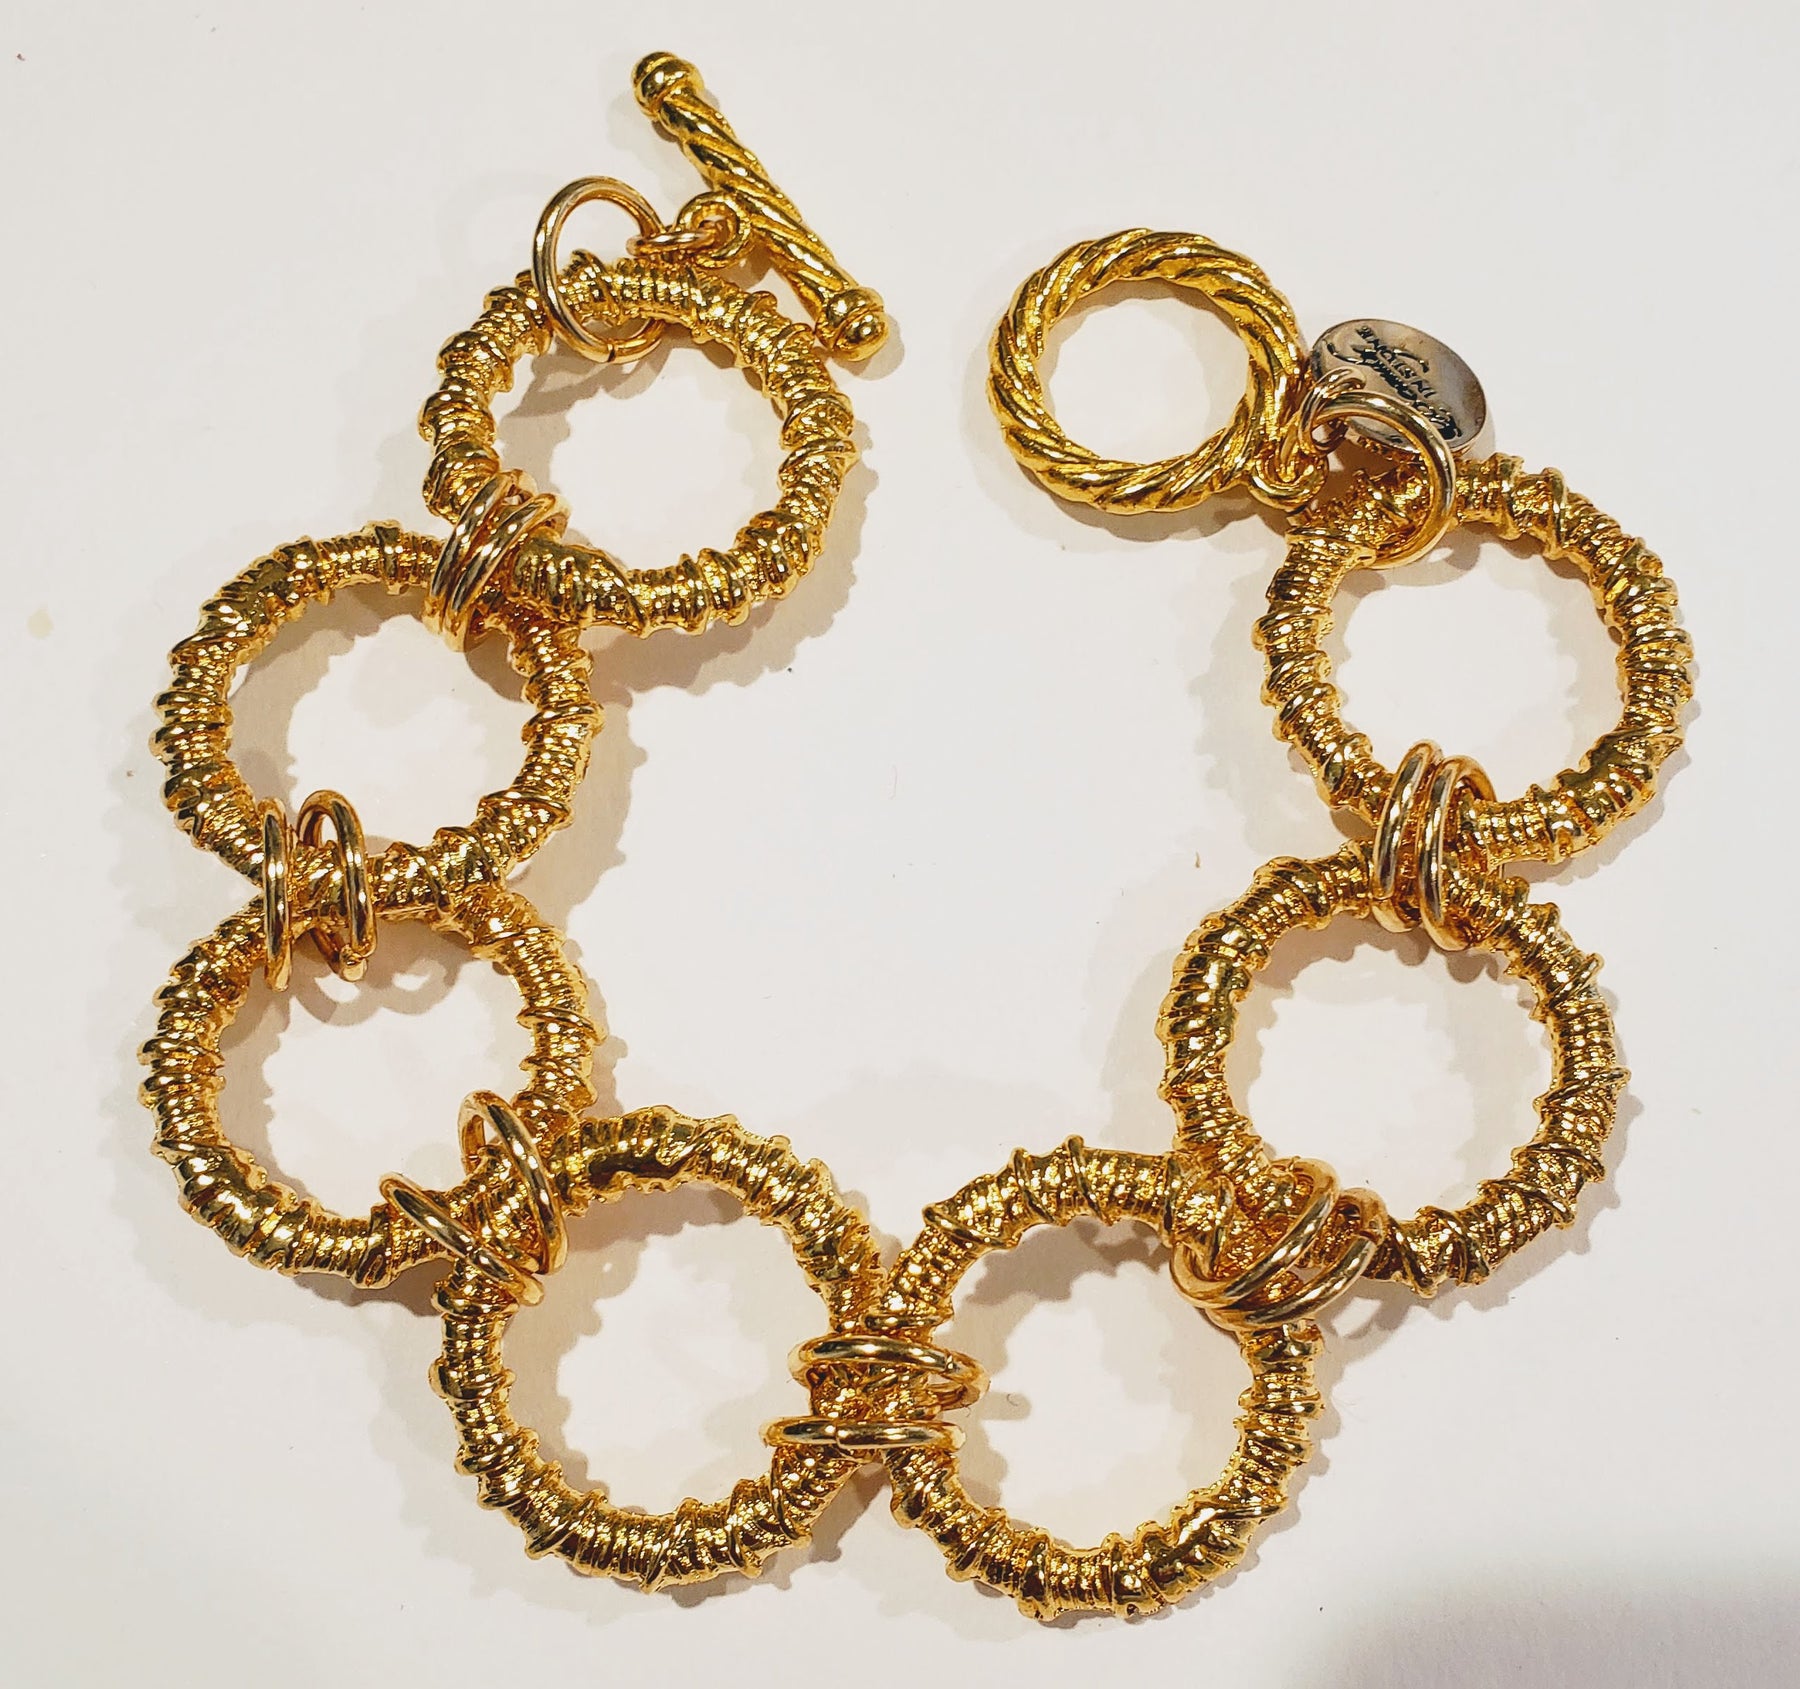 Large Link Gold Chain Bracelet | A Little Arty